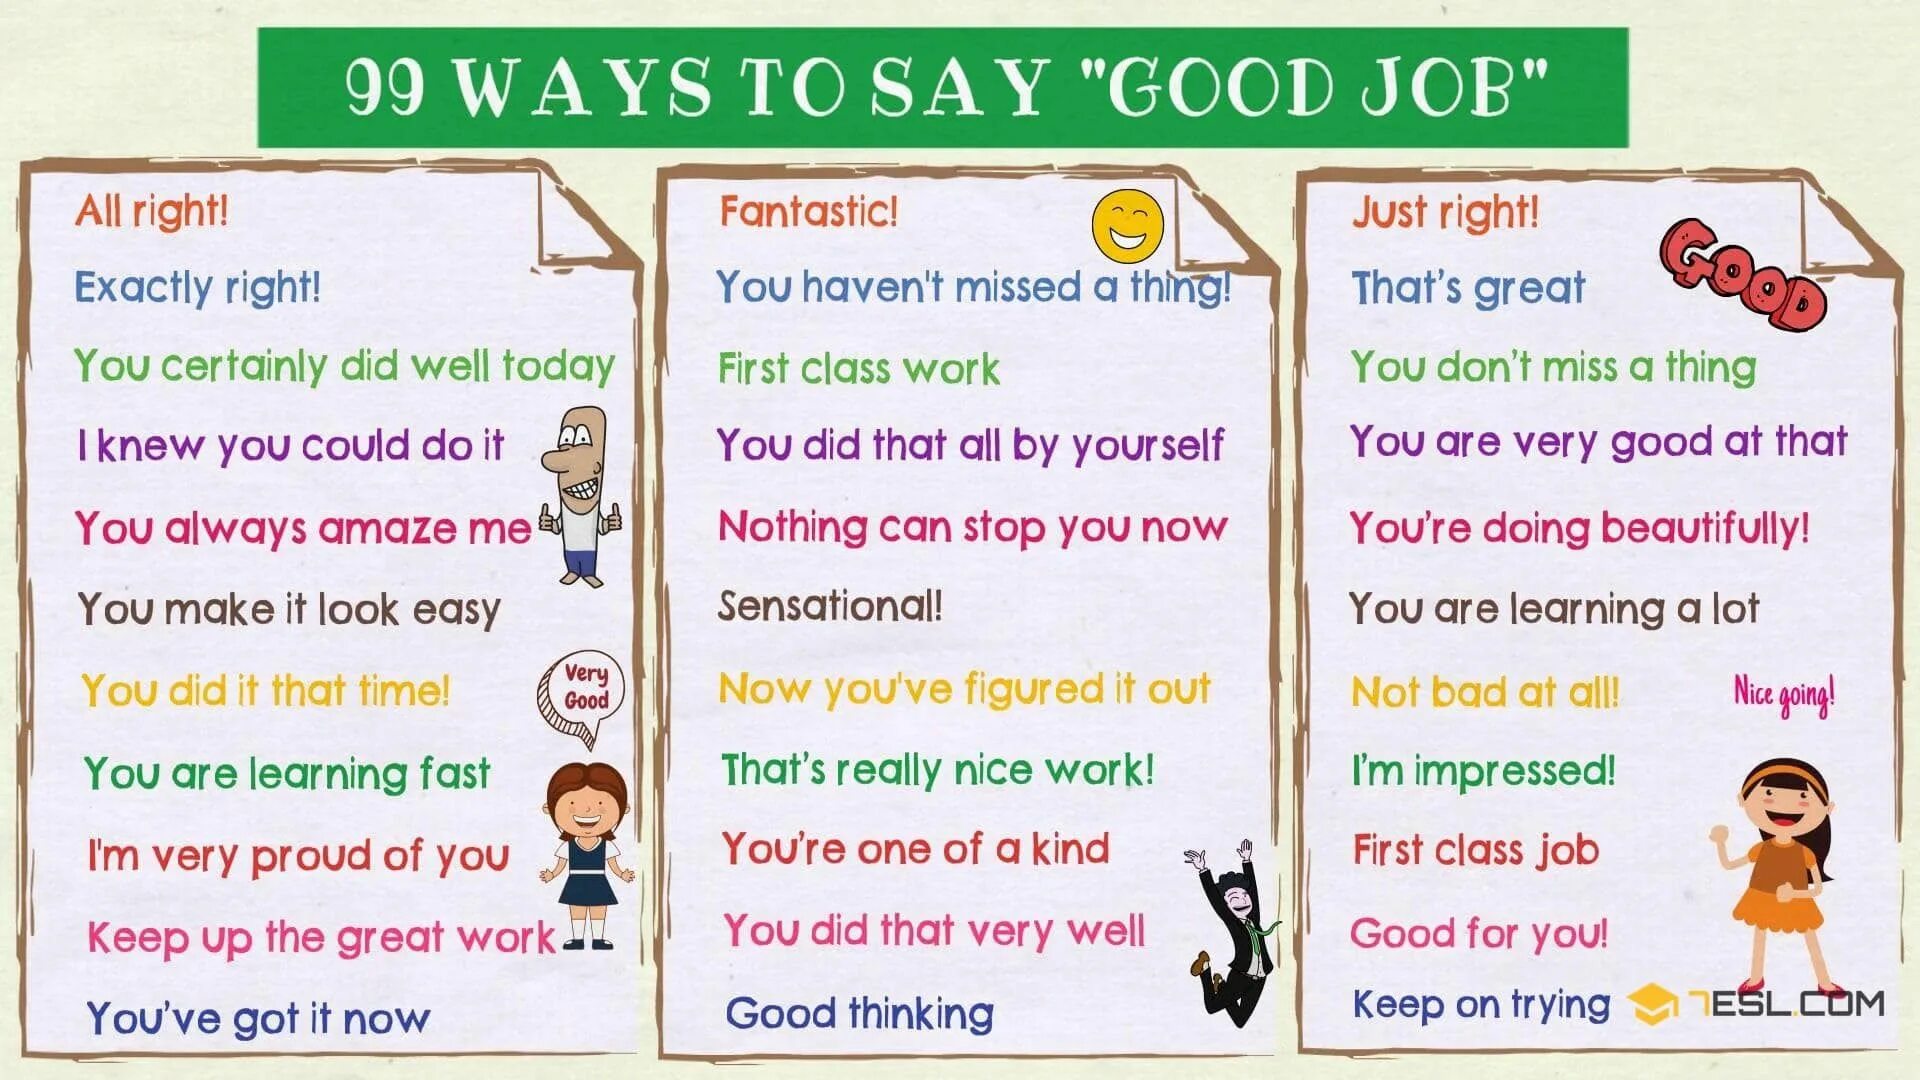 Good job синонимы. Ways to say good job. Ways to say great. Great синонимы на английском. To do one s best